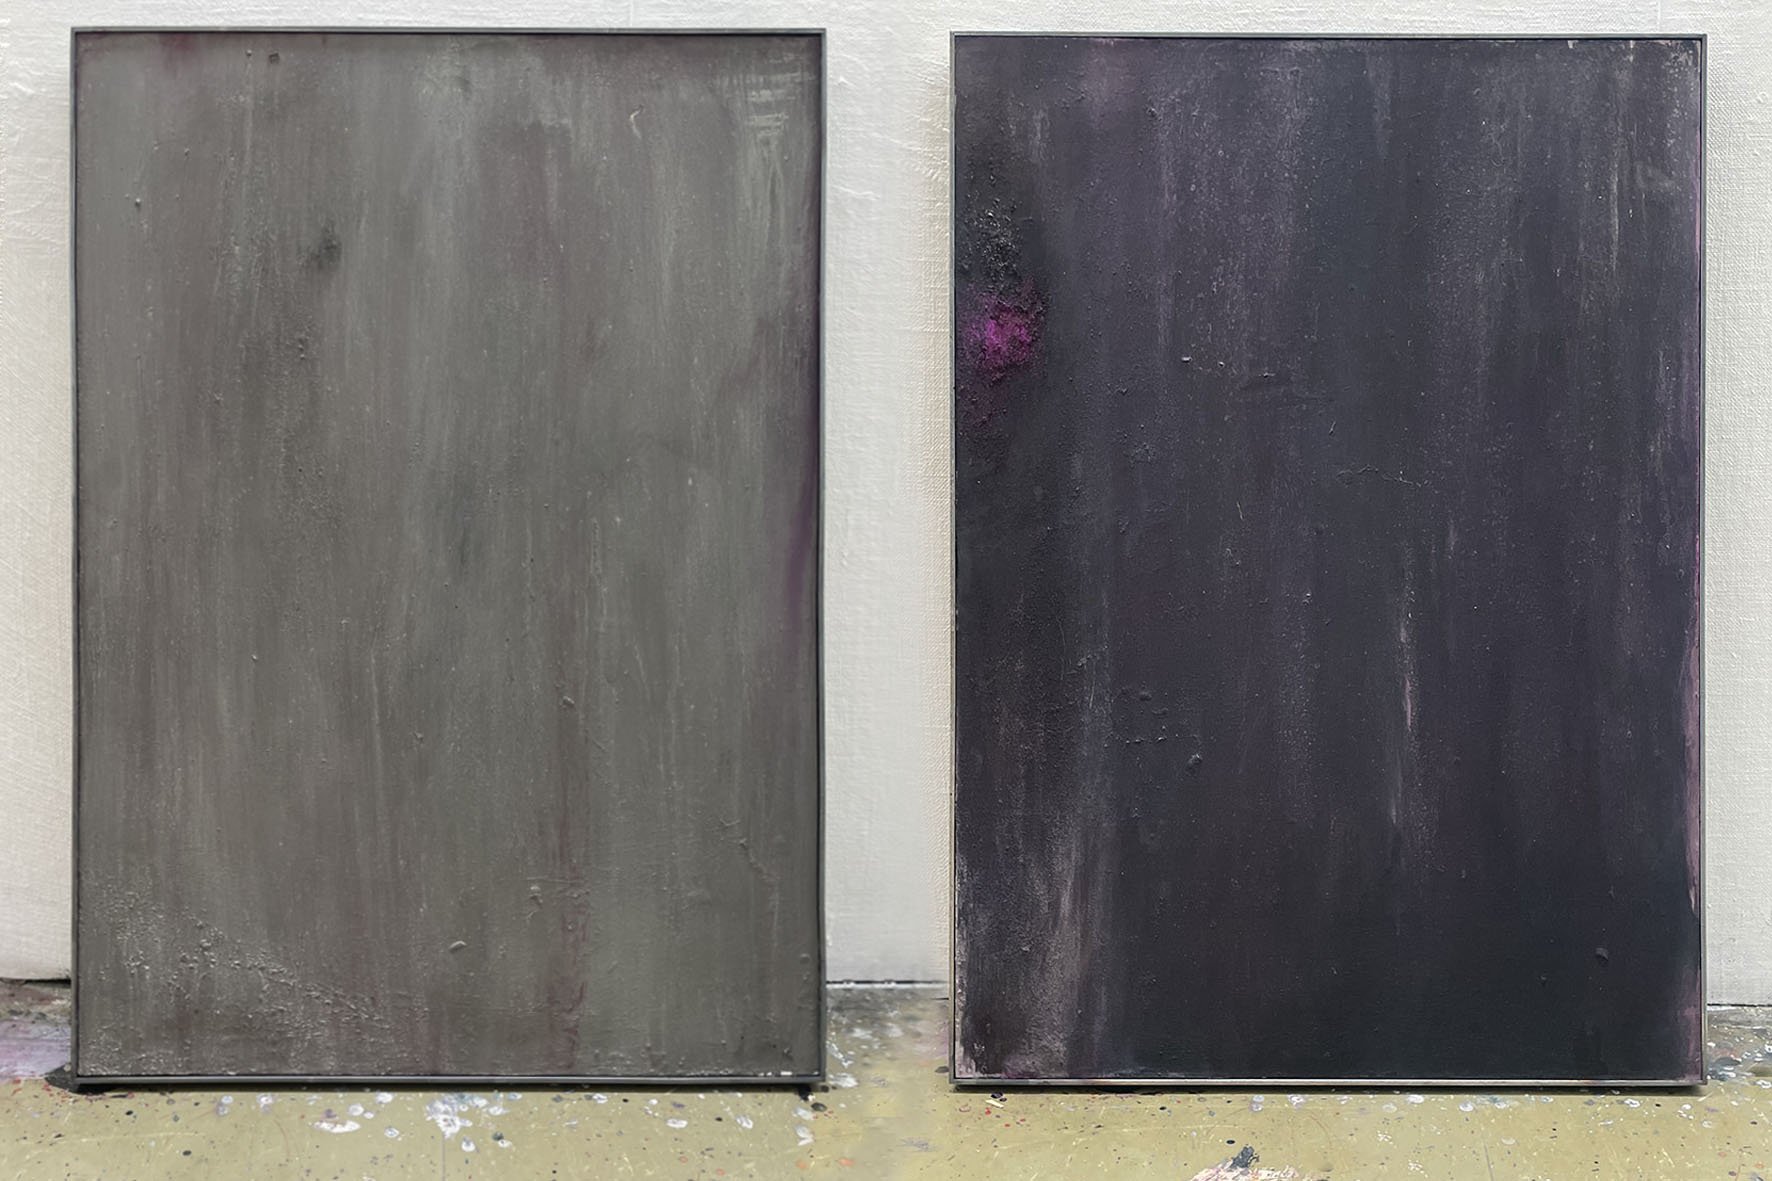  Mixed media, aluminium panel in steel frame, 600 x 840mm 